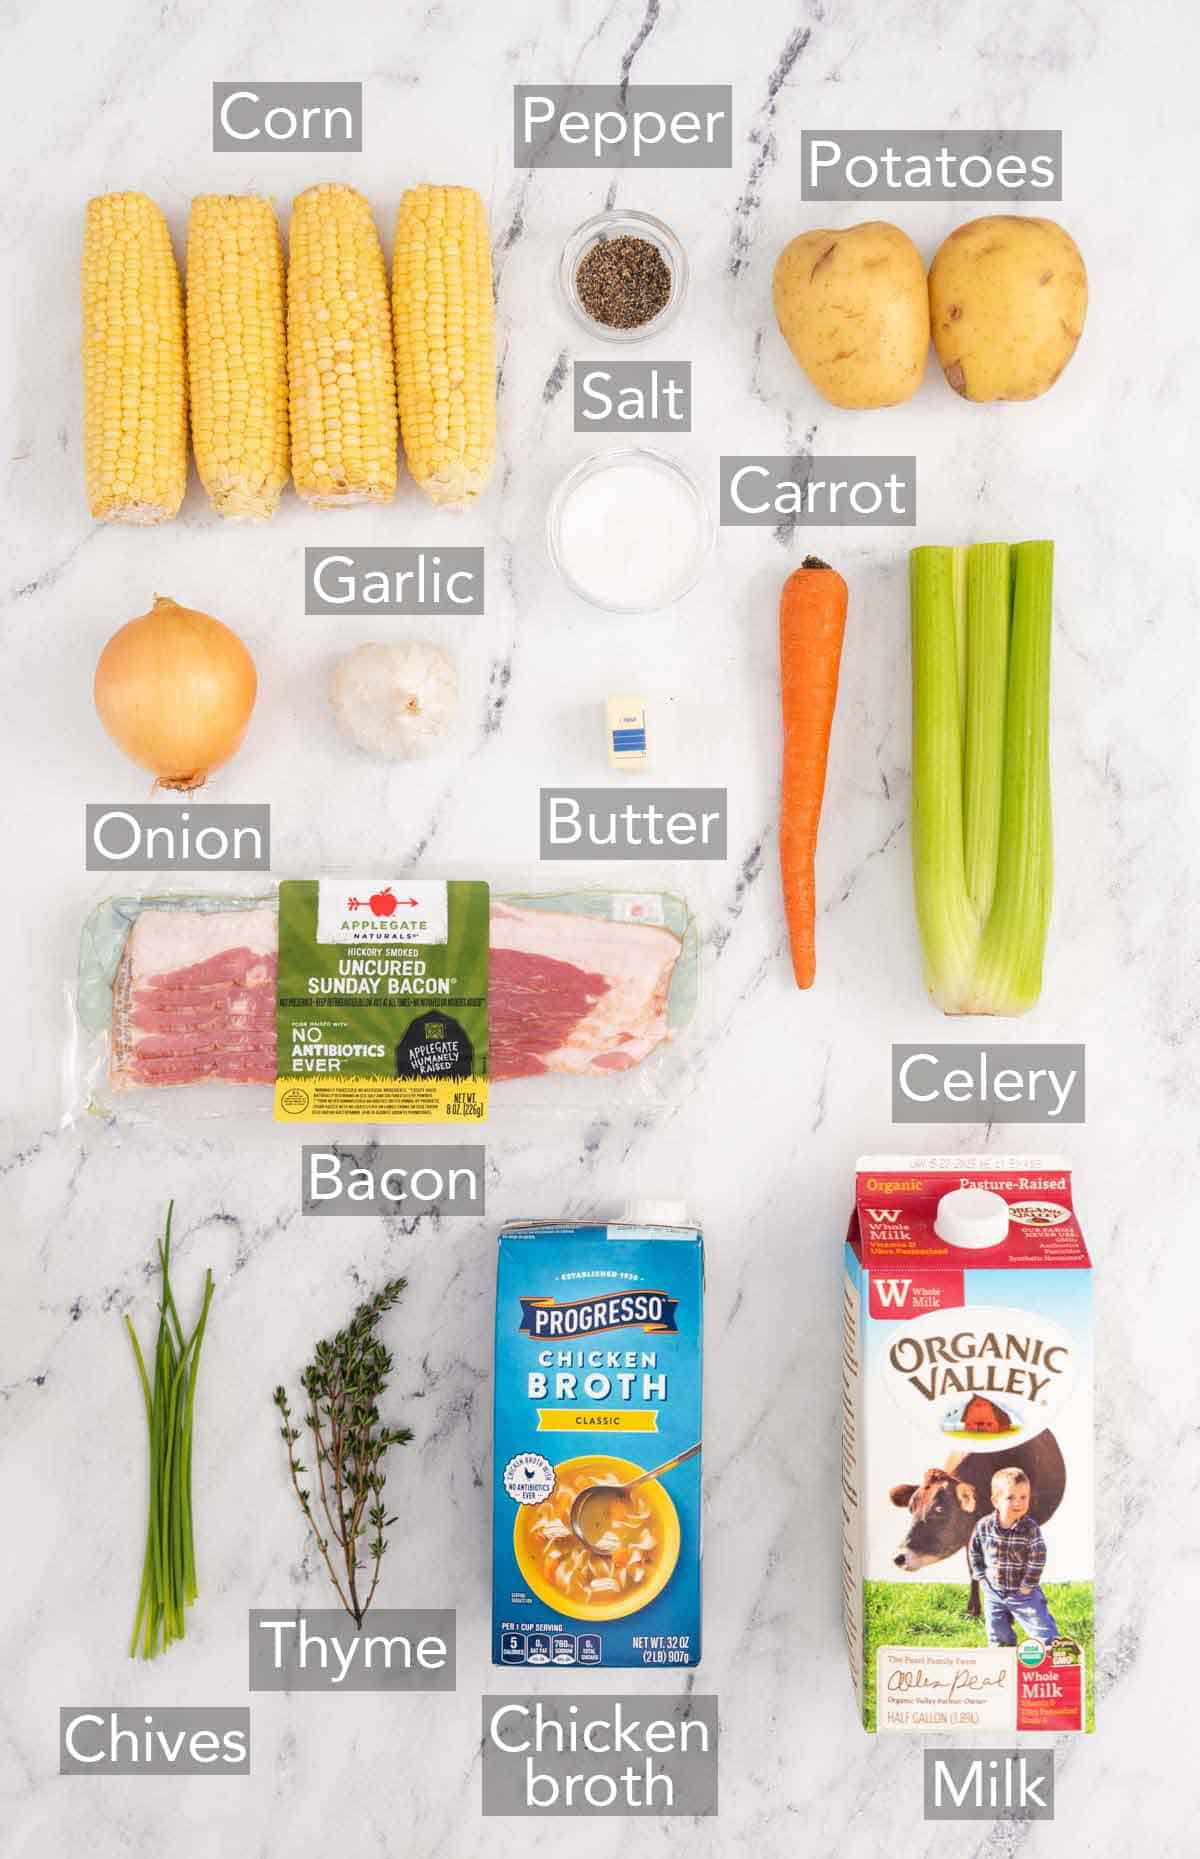 Ingredients needed to make corn chowder.